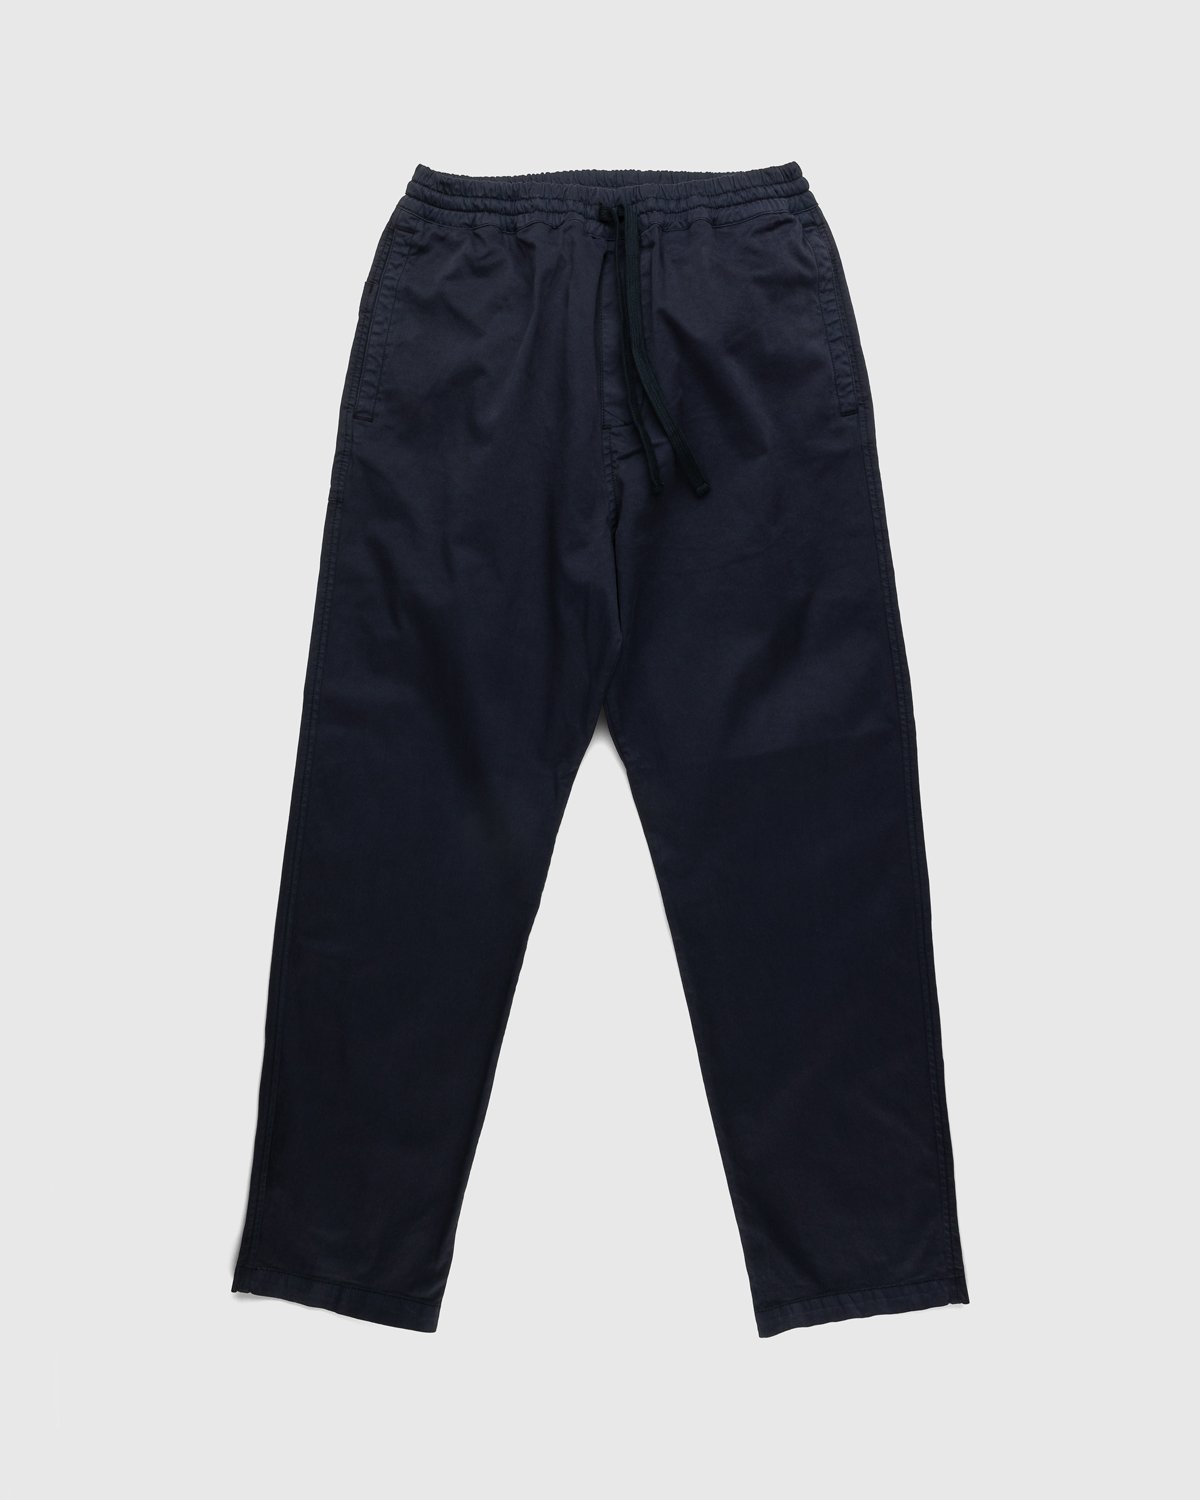 Carhartt WIP - Lawton Pant Navy - Clothing - Blue - Image 1